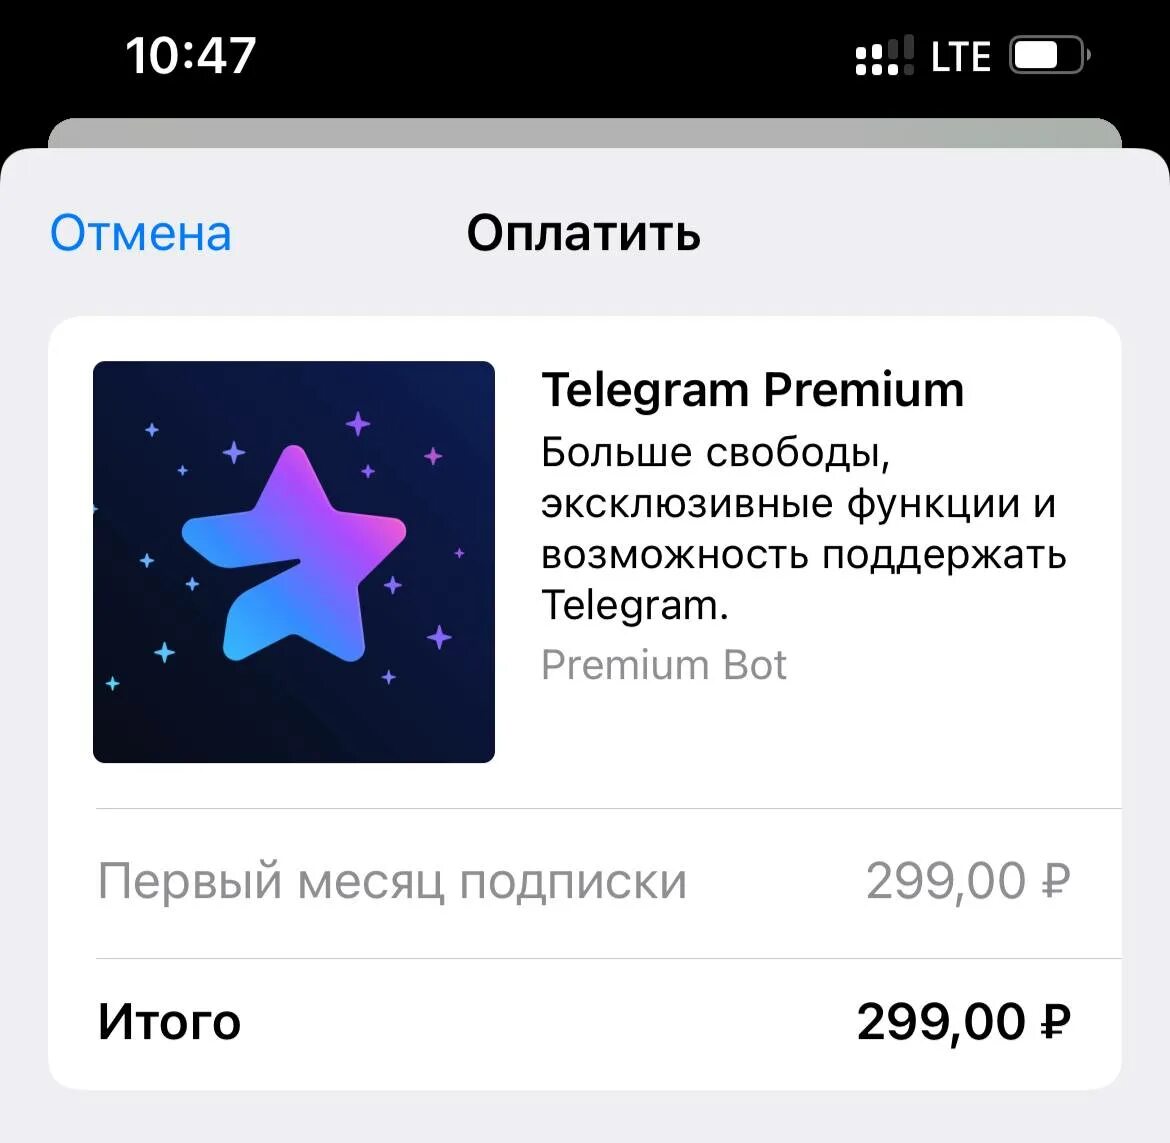 Telegram Premium. Подписка телеграмм премиум. Телеграм премиум логотип. Премиум бот телеграмм.